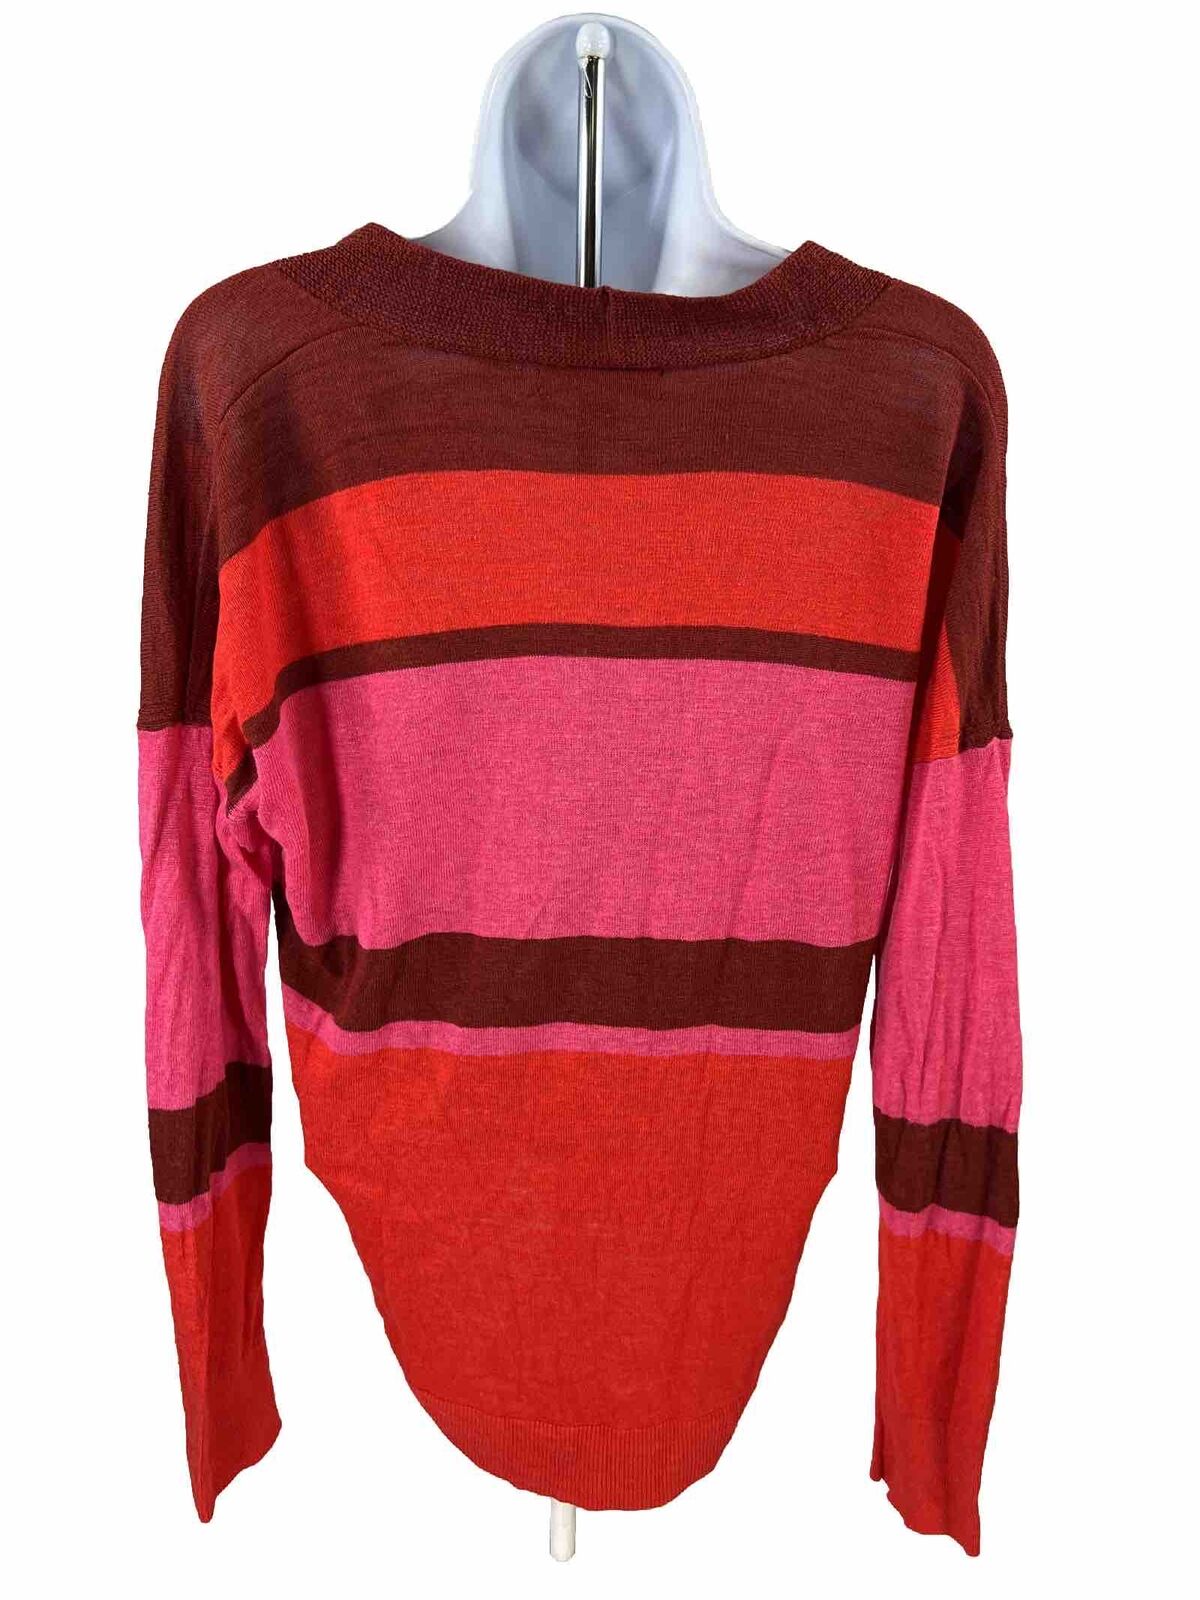 Banana Republic Women's Red Striped Linen Blend Knit Sweater - M